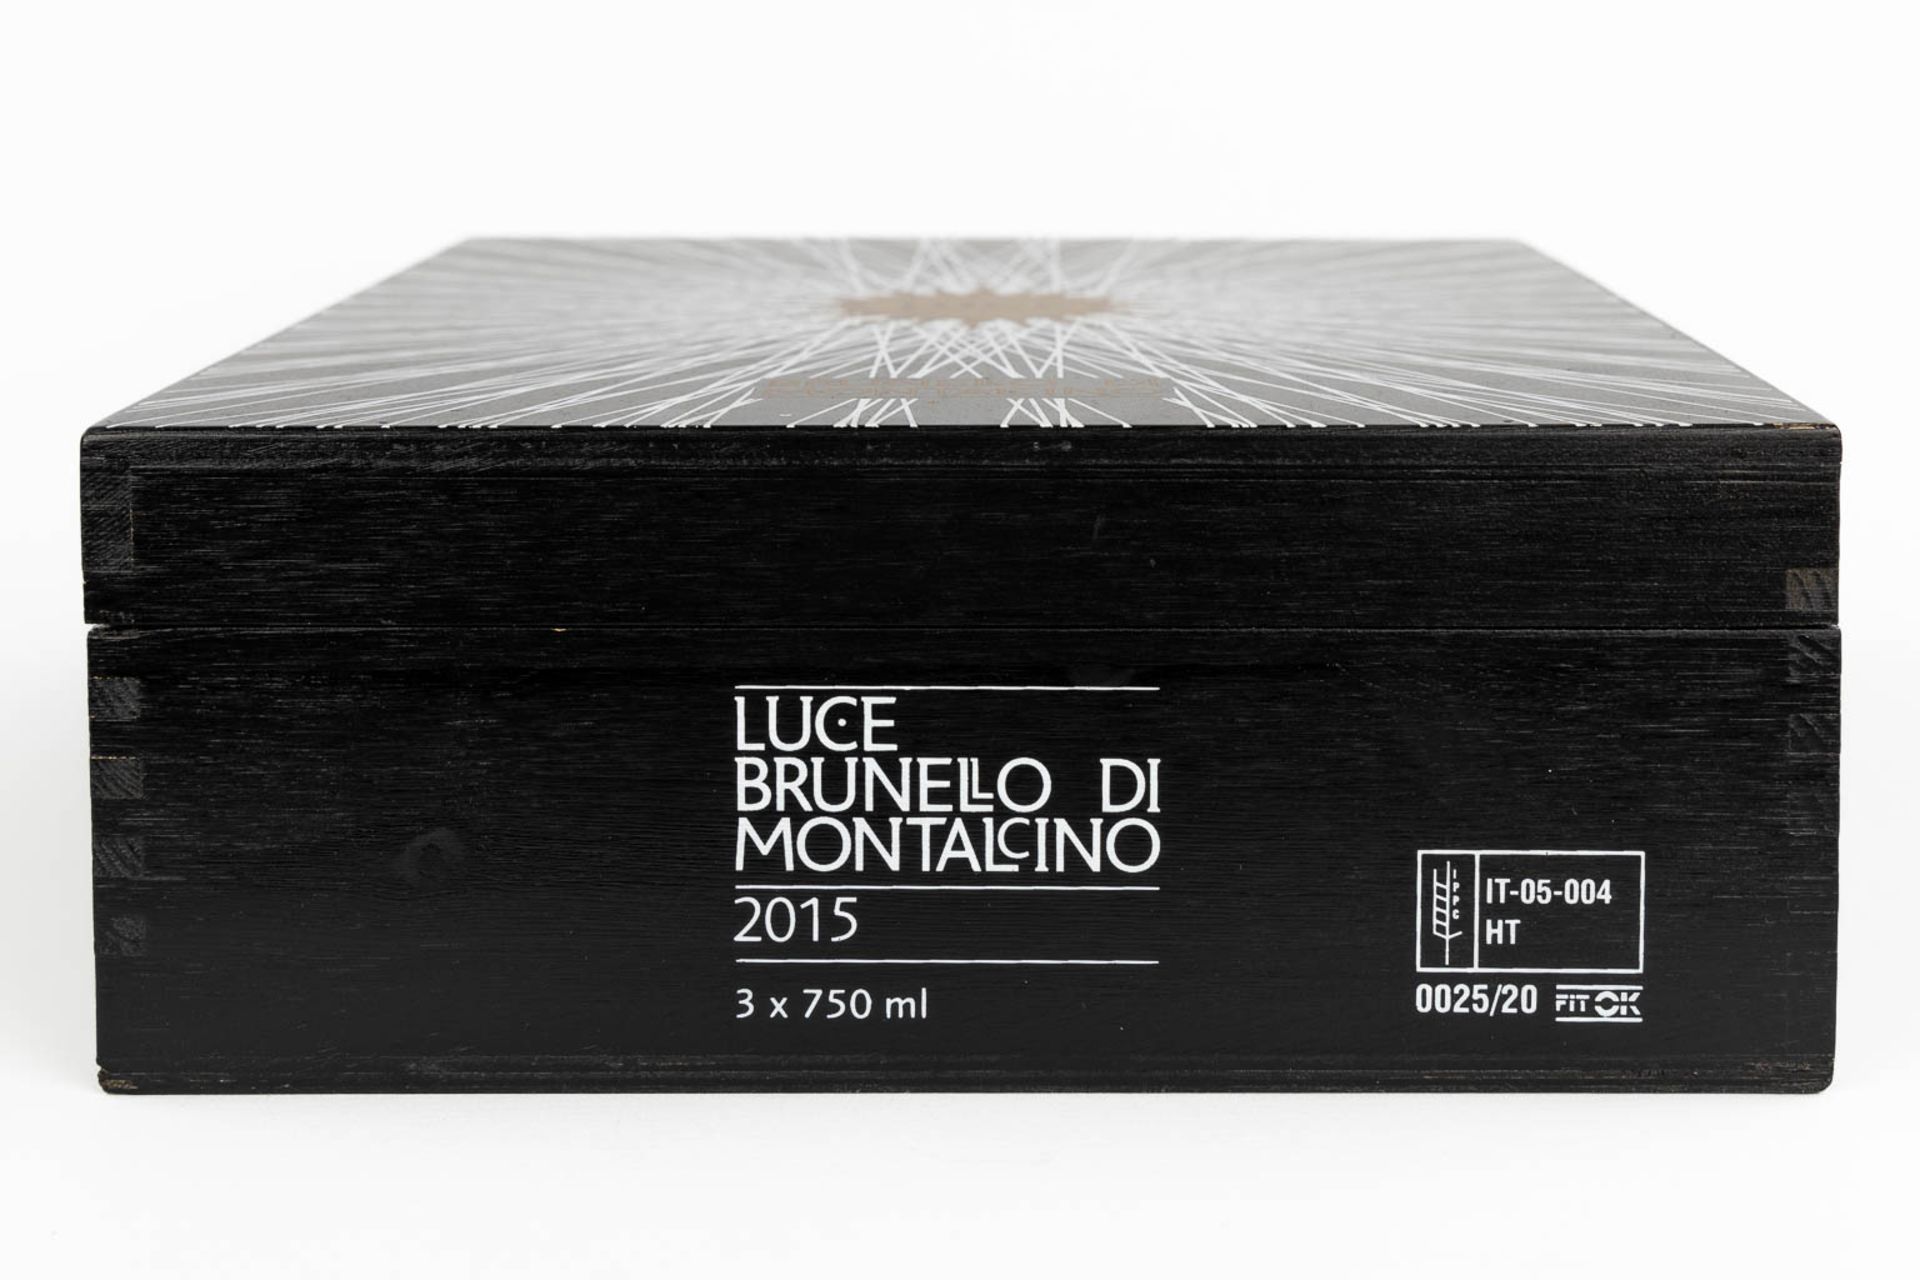 2015 Luce Brunello Di Montalcino, 5 bottles. - Image 3 of 7